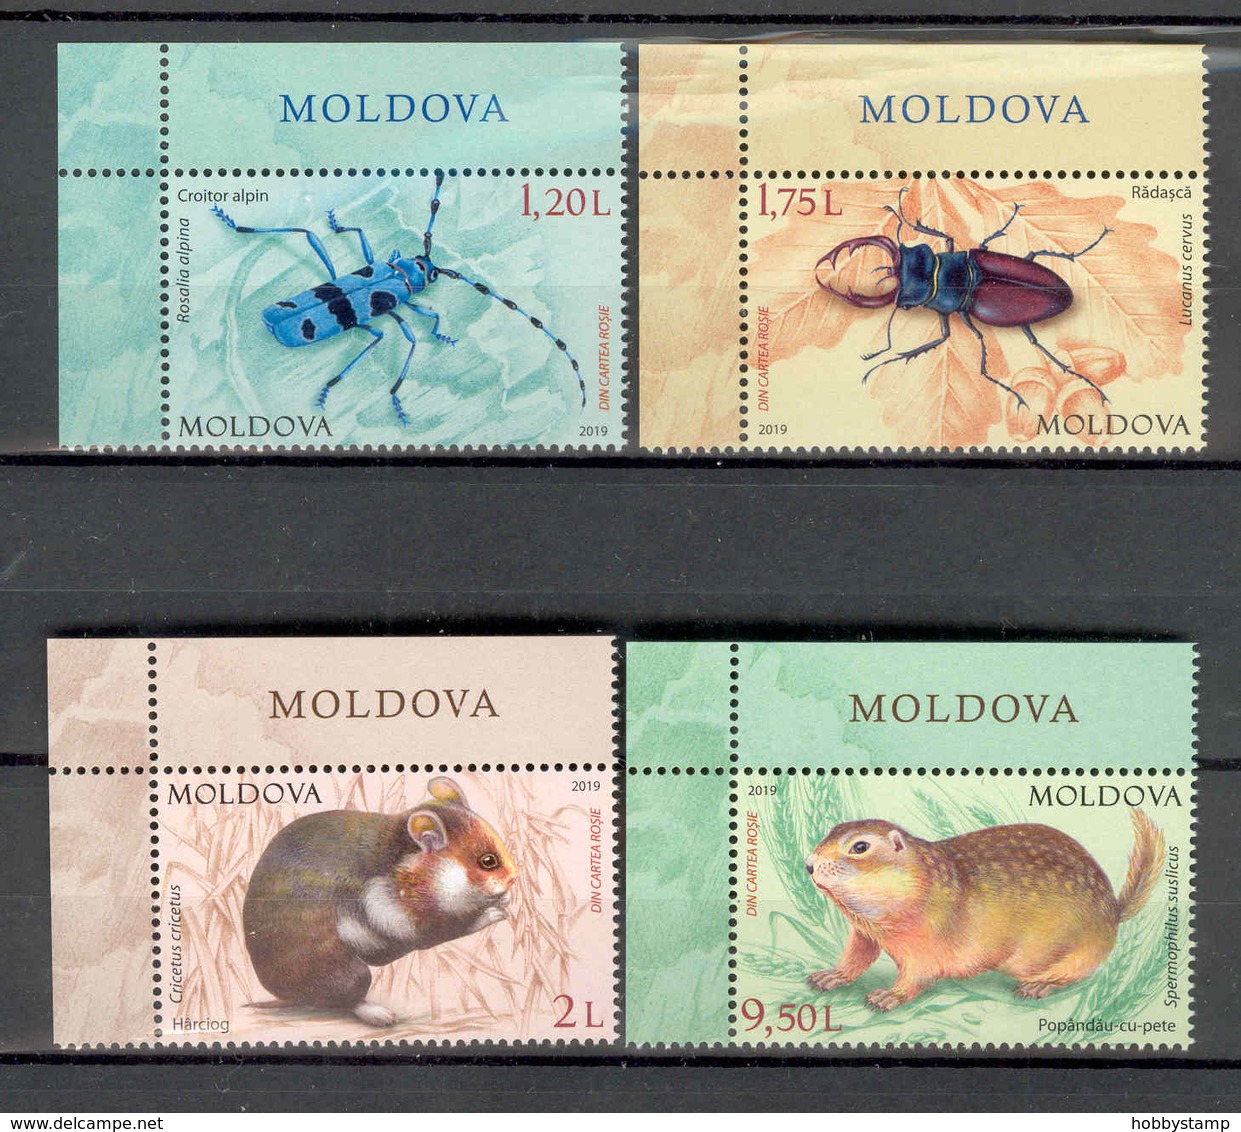 Moldova 2019 Red Book Of Moldova Beetles Insects Rodents Set Of 4v** MNH - Moldova